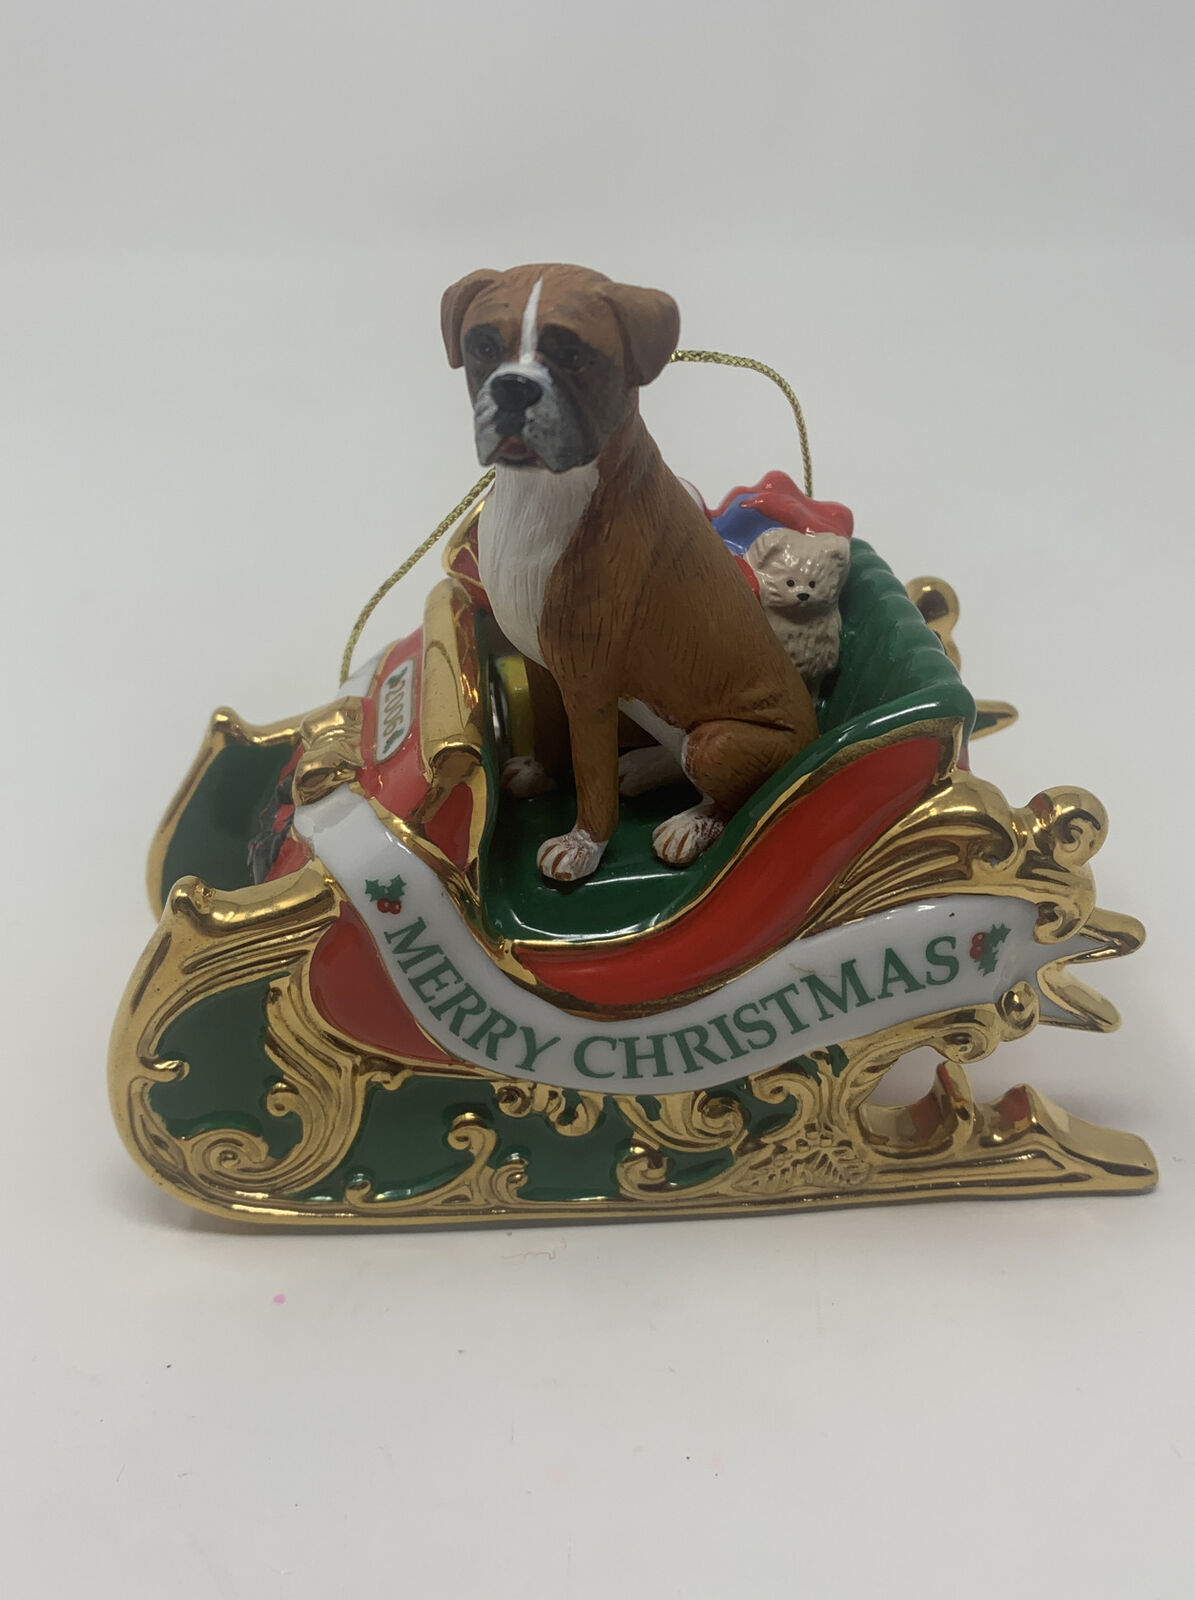 Danbury Mint Porcelain Christmas Ornament Boxer Santa’s Helper 2006